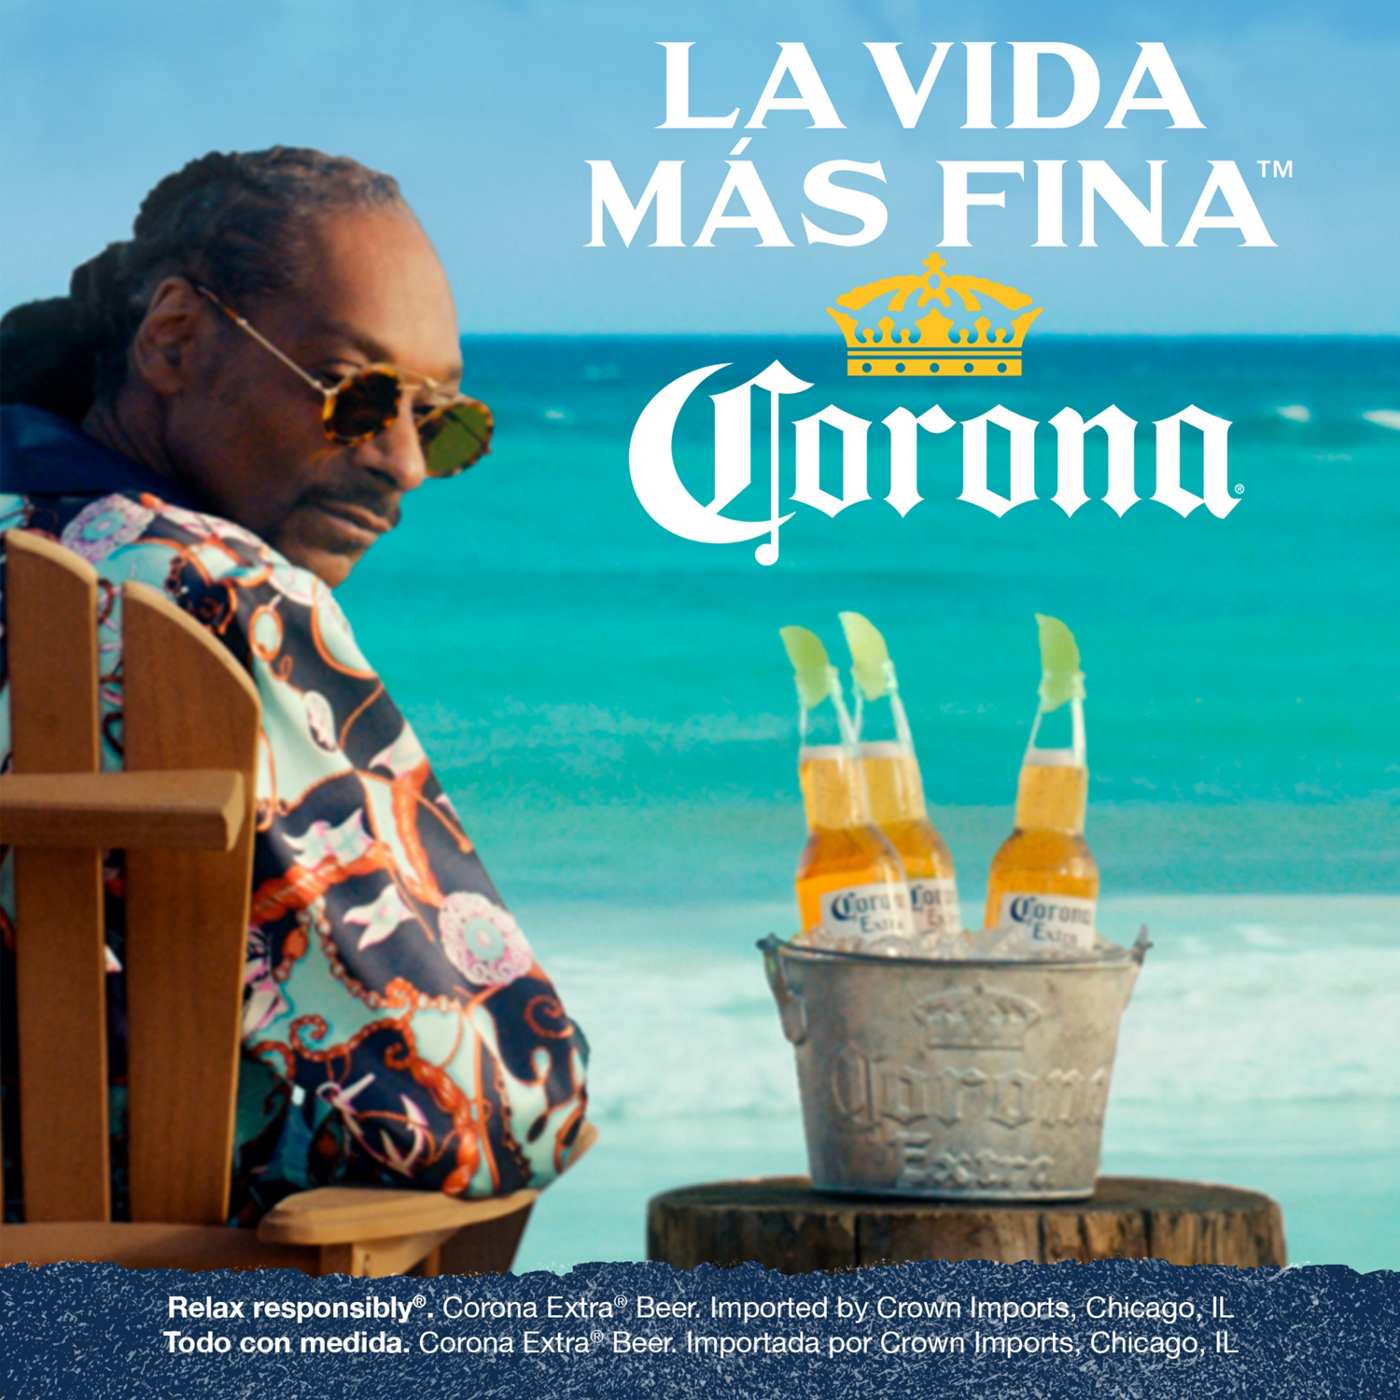 Corona Extra Coronita Mexican Lager Import Beer 7 oz Bottles, 24 pk; image 7 of 11